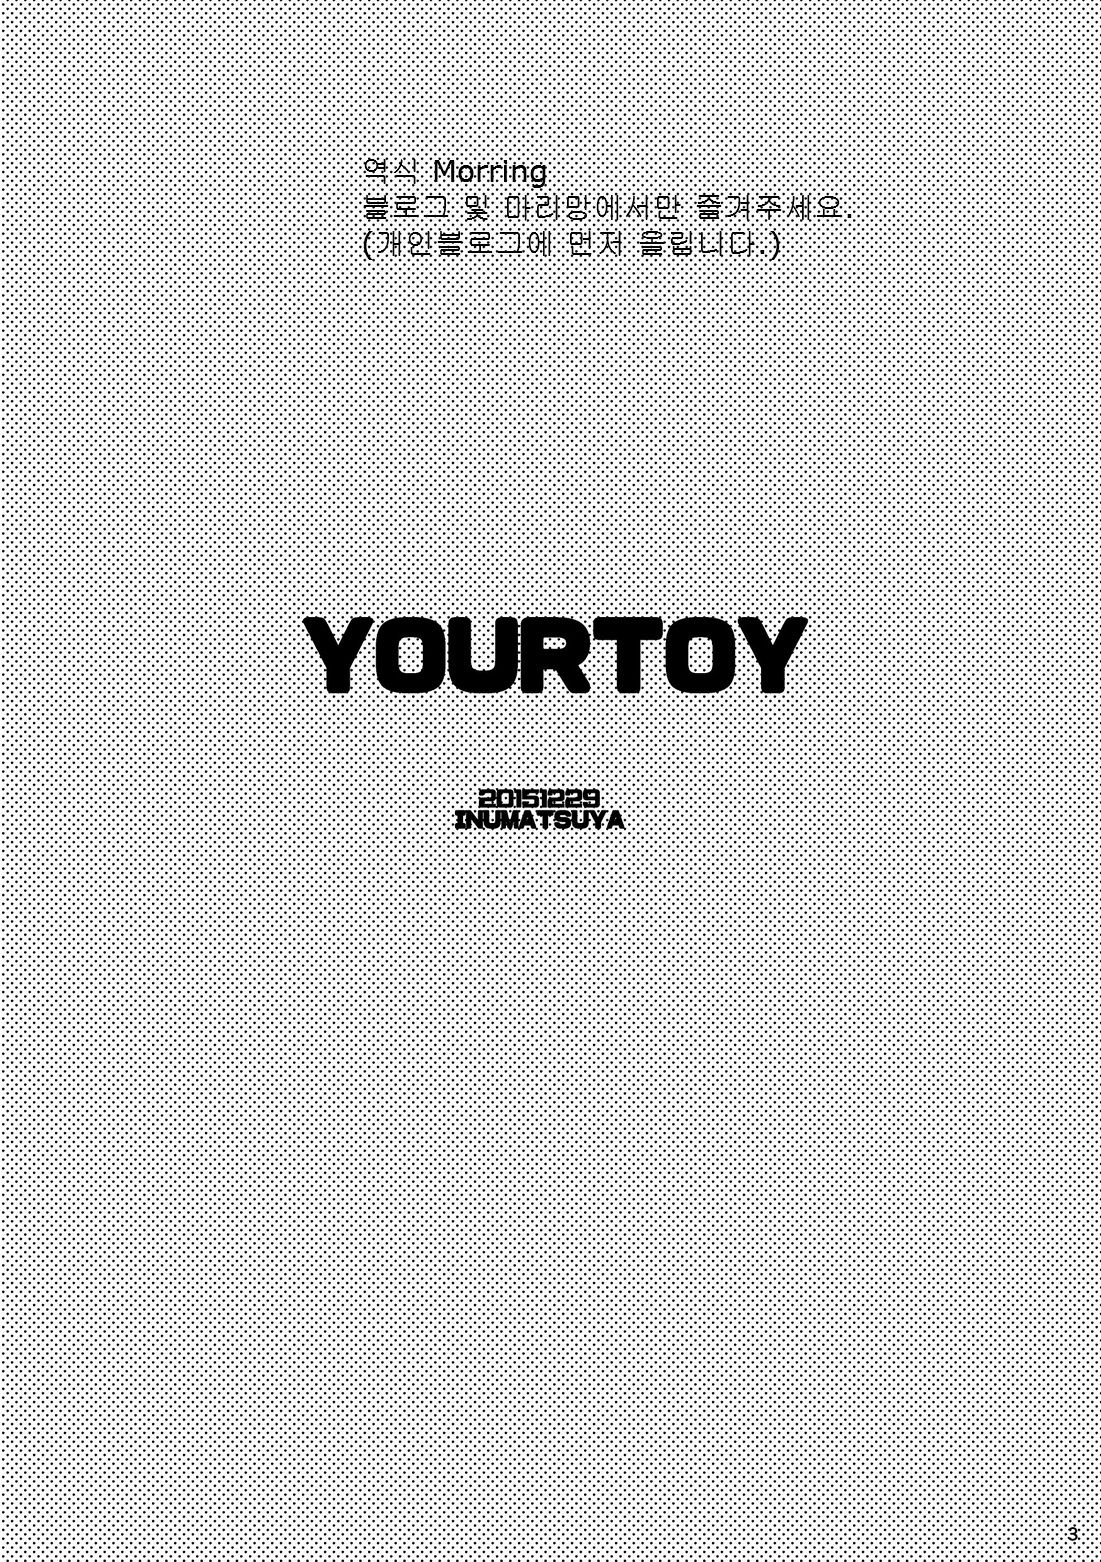 Yourtoy - Foto 2